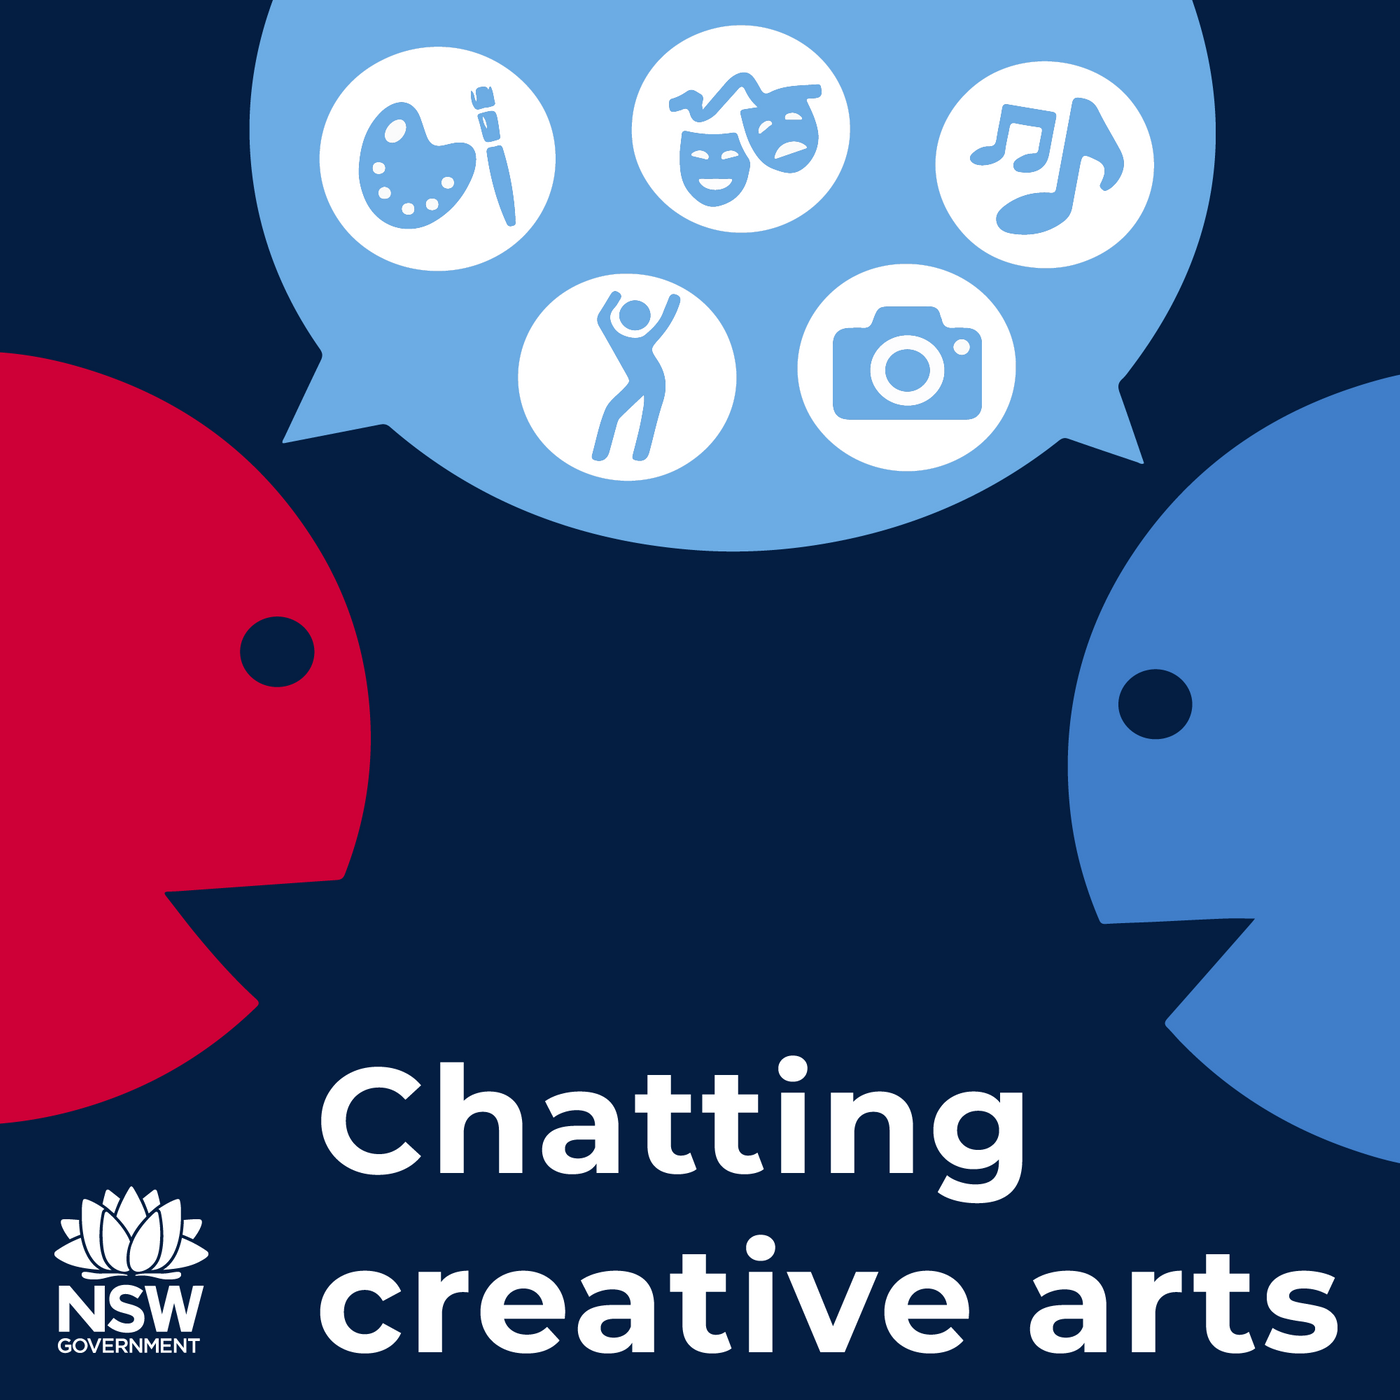 Chatting creative arts